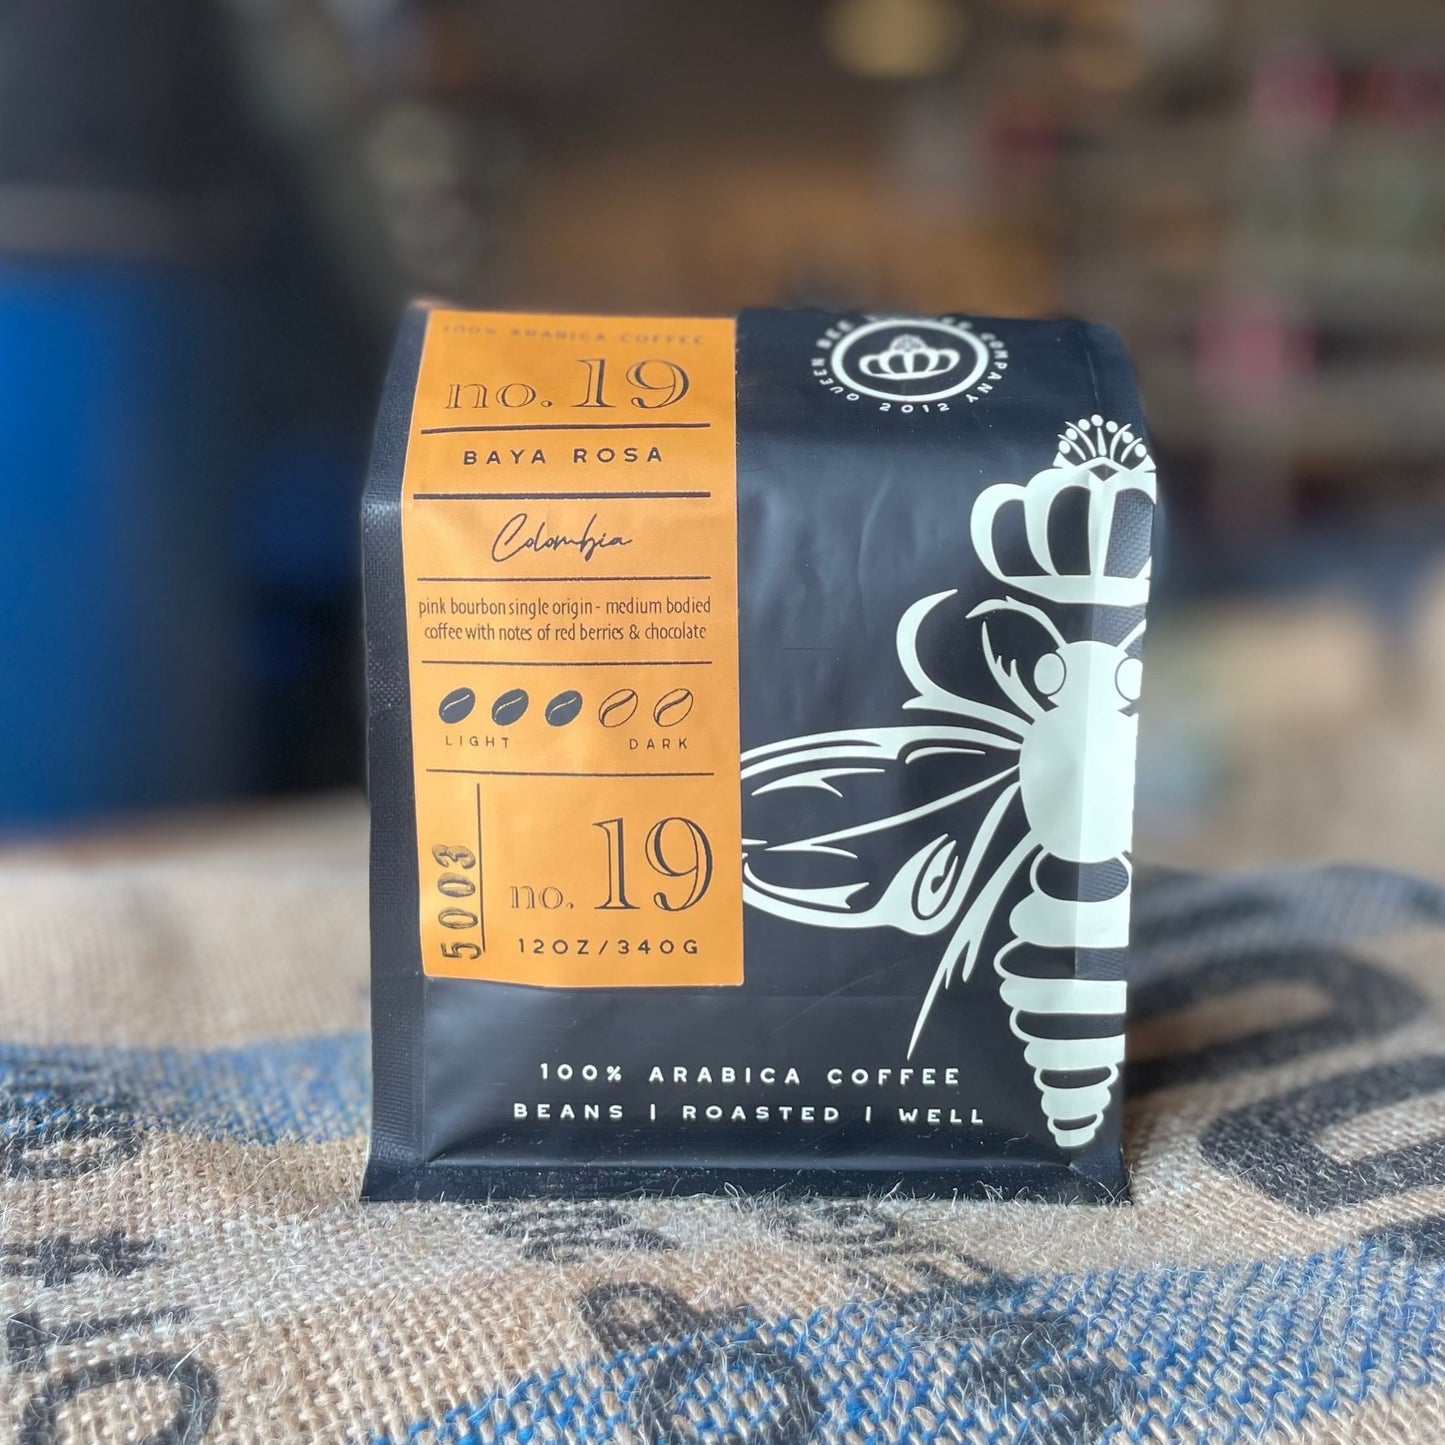 Baya Rosa (Colombia) Coffee